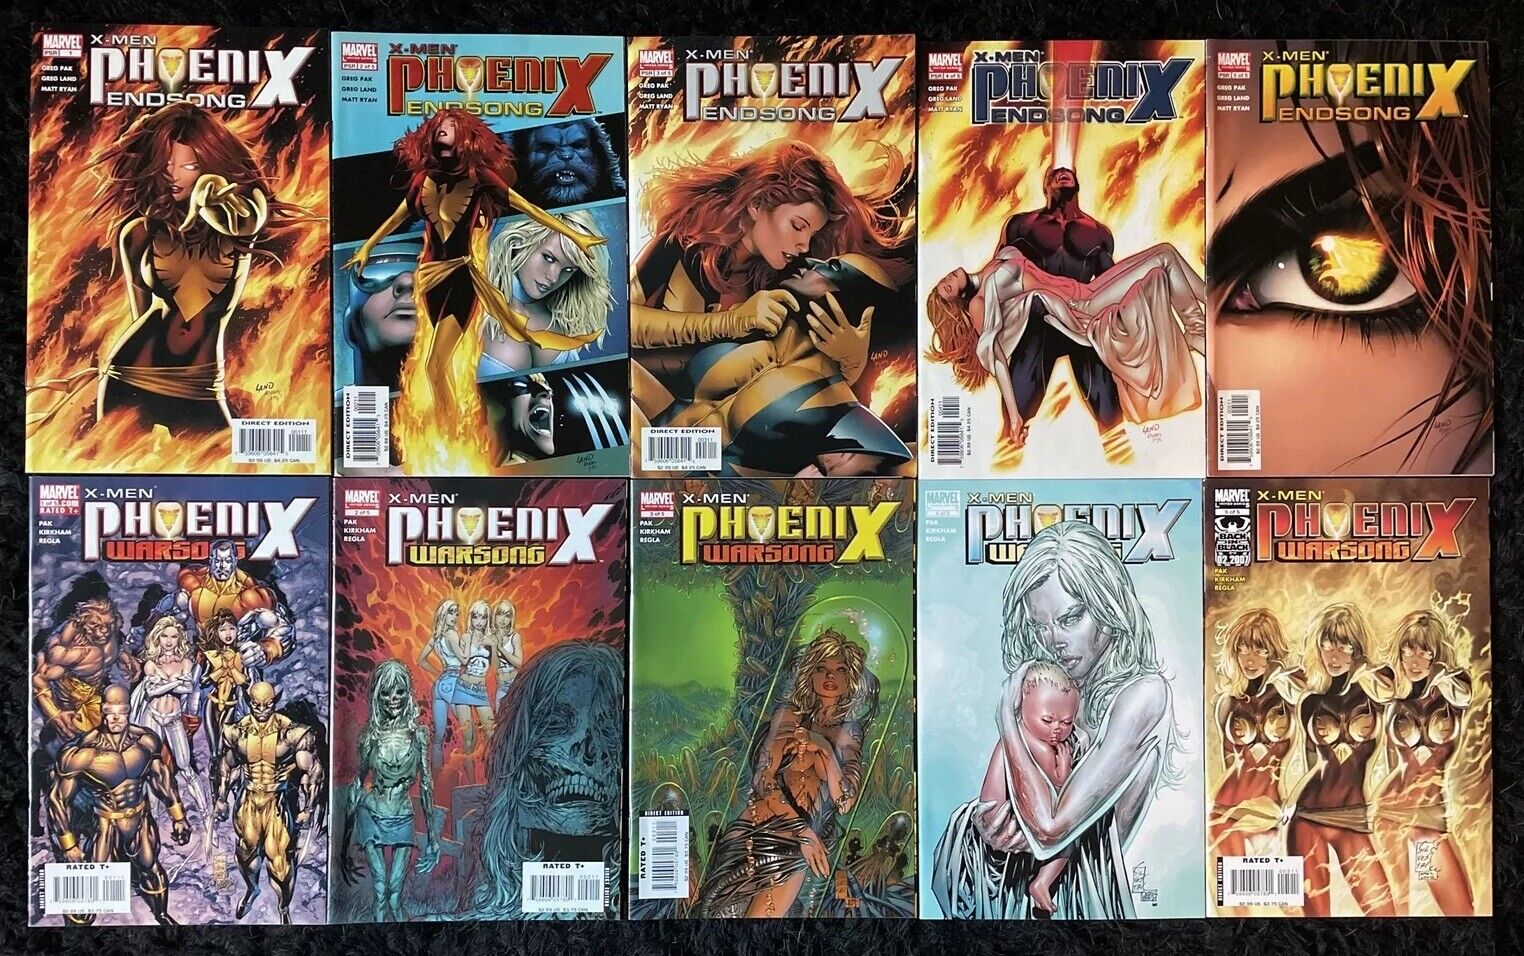 X-Men Phoenix Endsong (2005) & Warsong (2006) #1-5 COMPLETE SETS - Marvel Comics